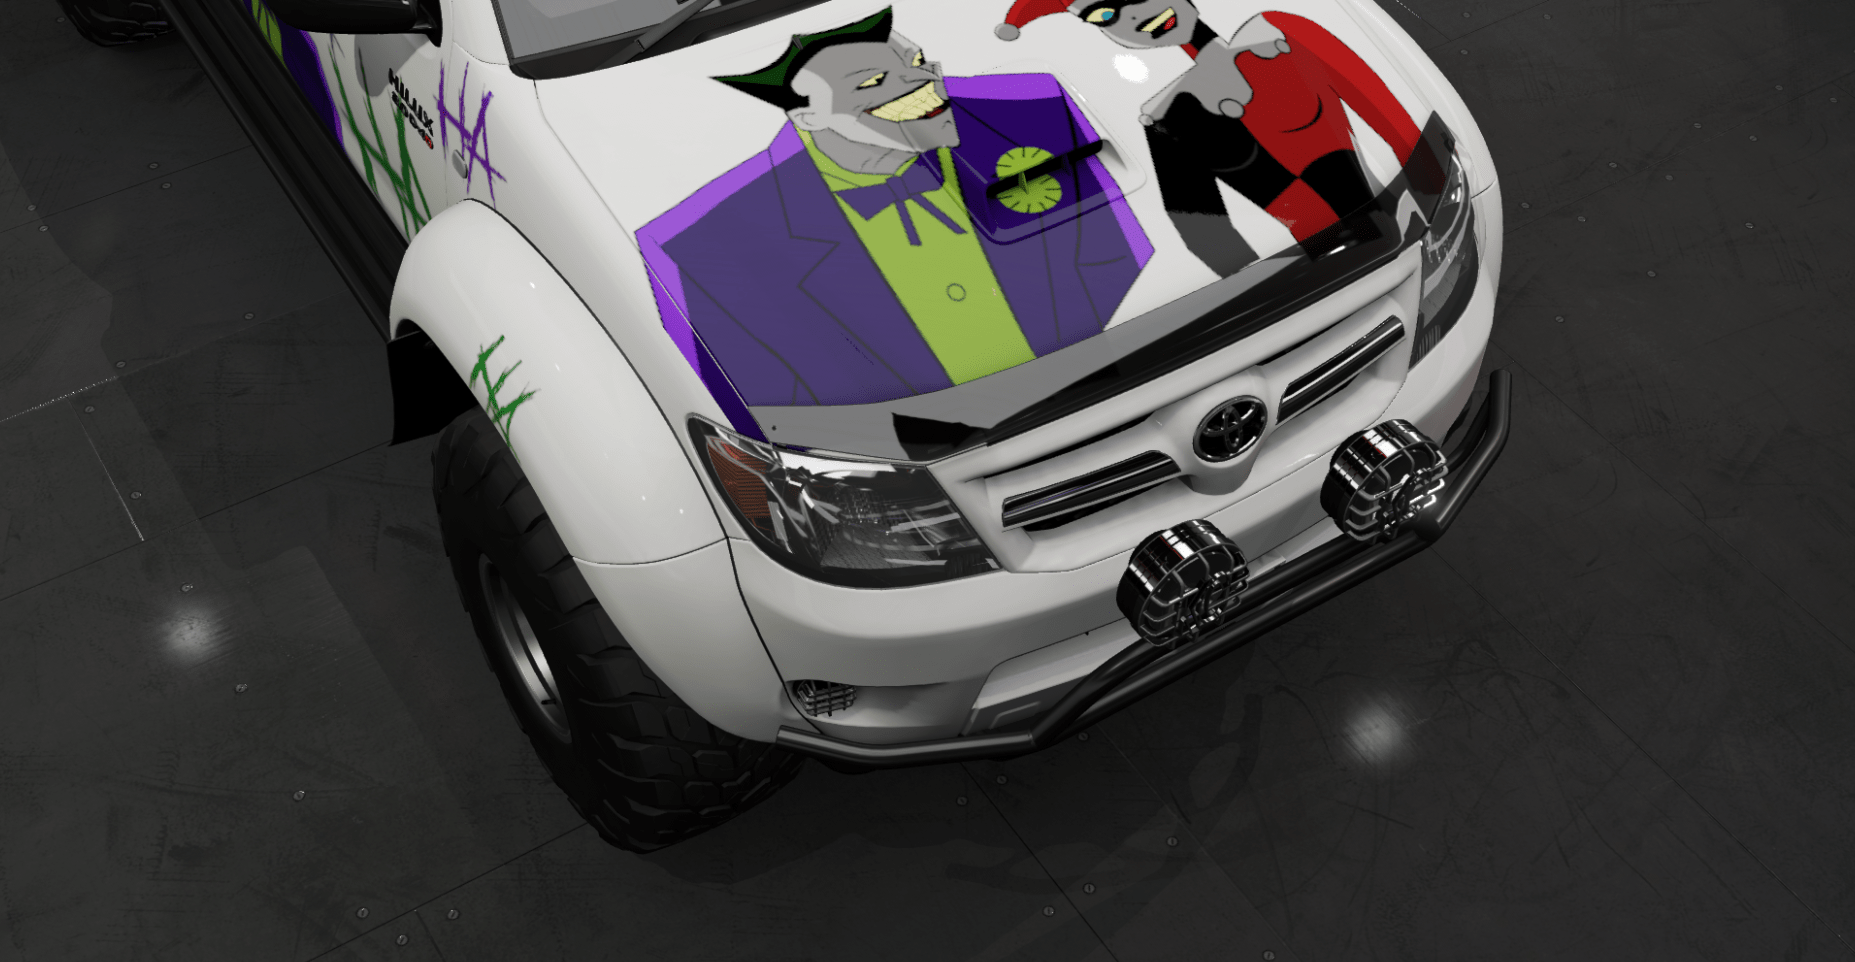 Joker and Harley Forza - Ryan Bucci Portfolio